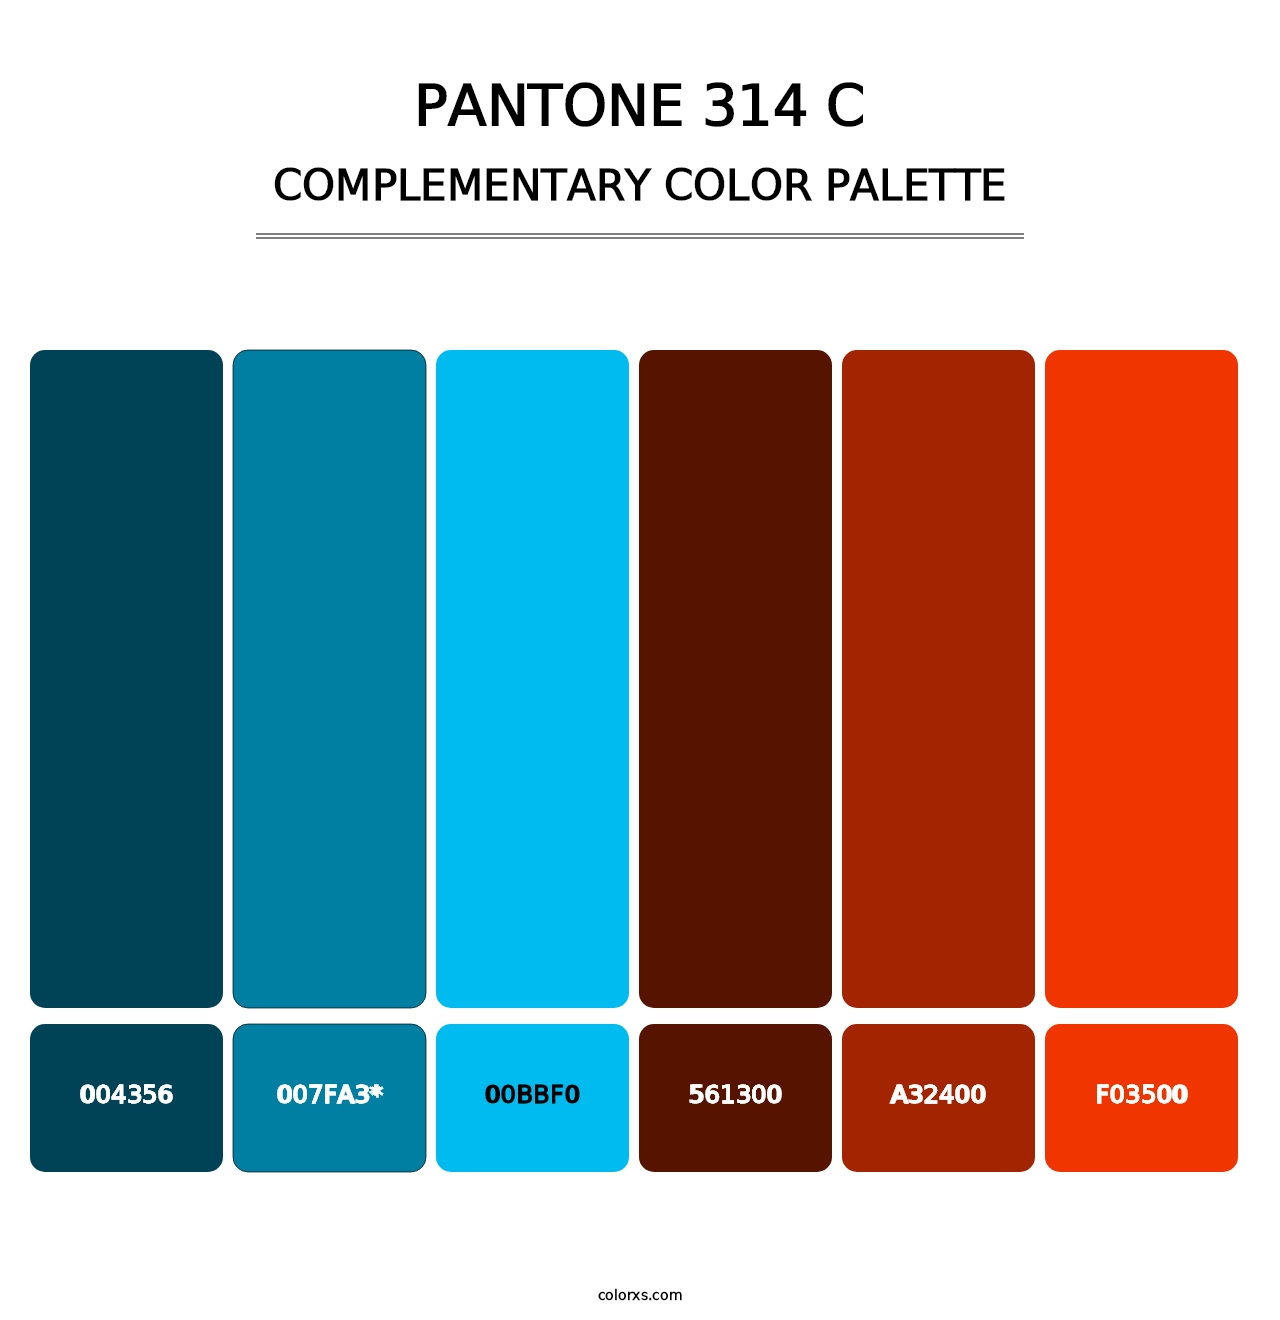 PANTONE 314 C - Complementary Color Palette